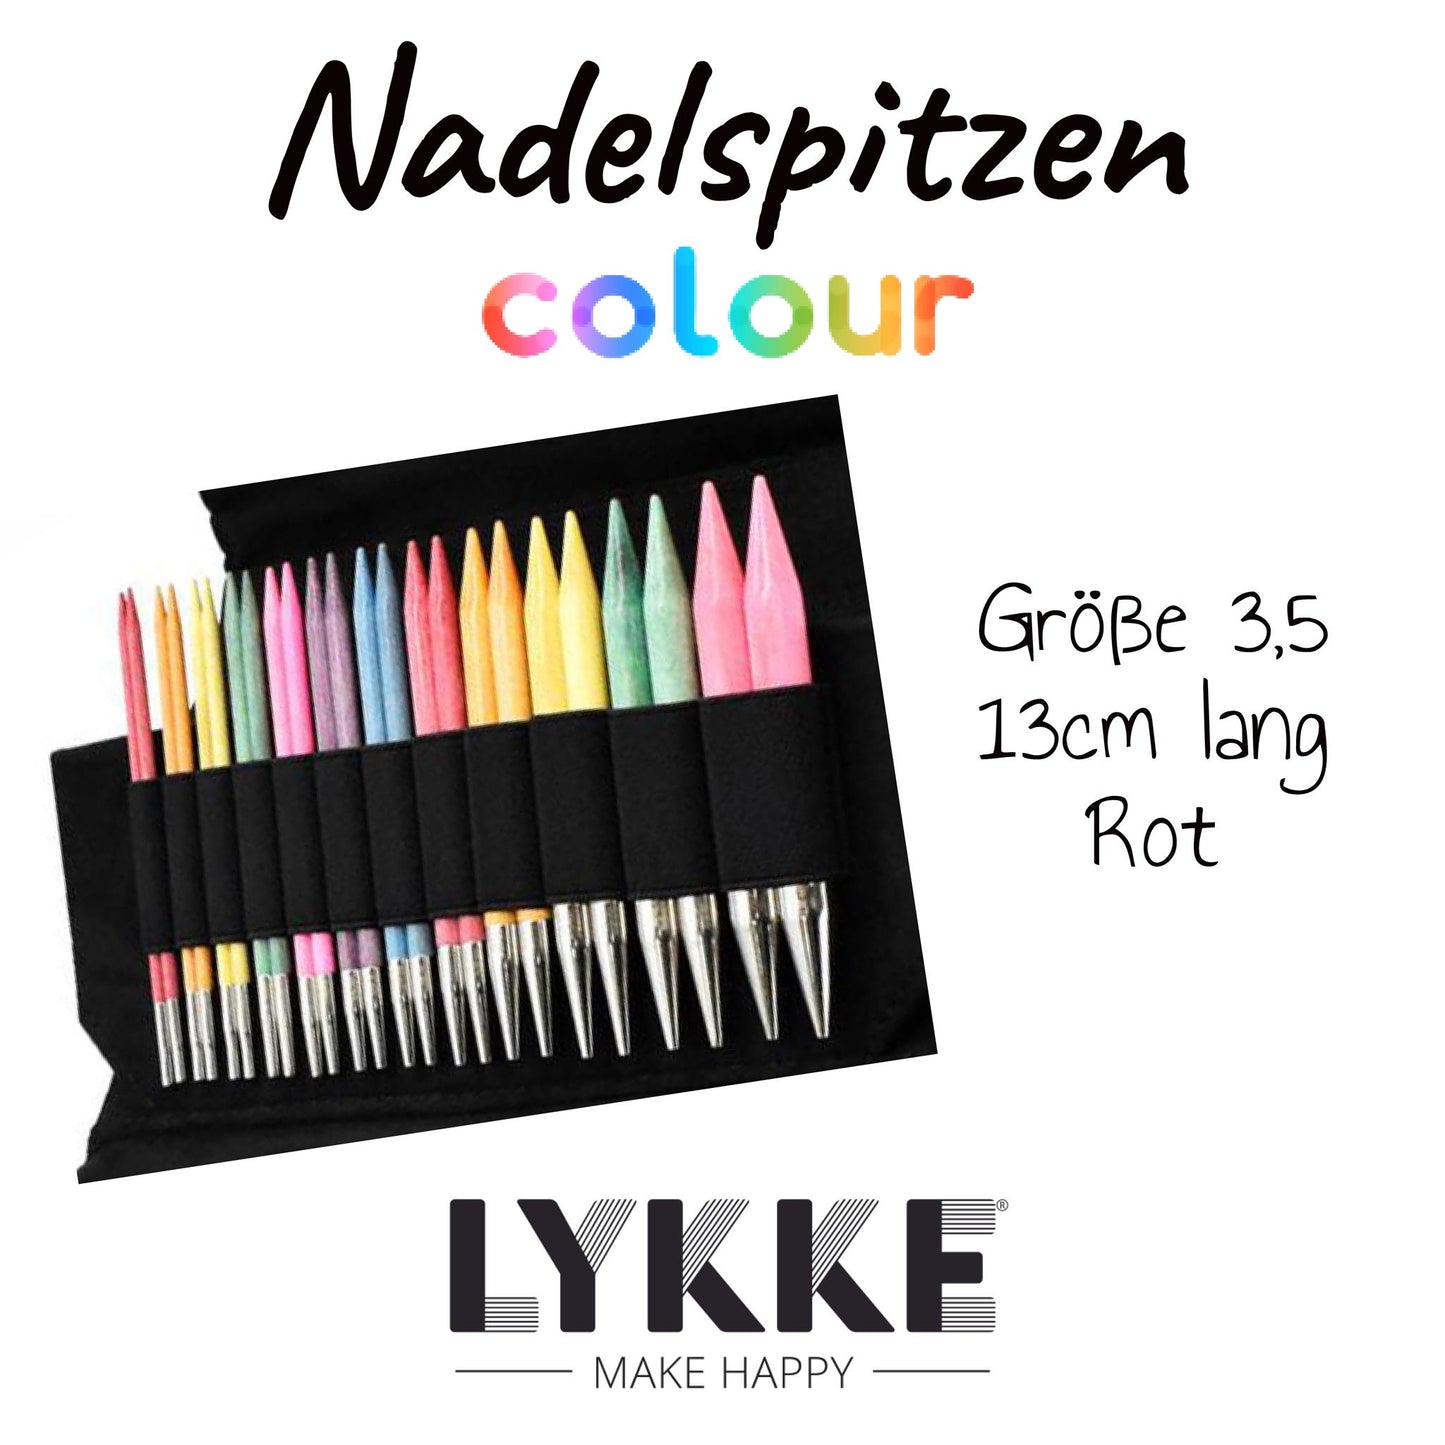 Lykke Stricknadelspitze Colour, 3,5, Birkenholz farbig, 15005200